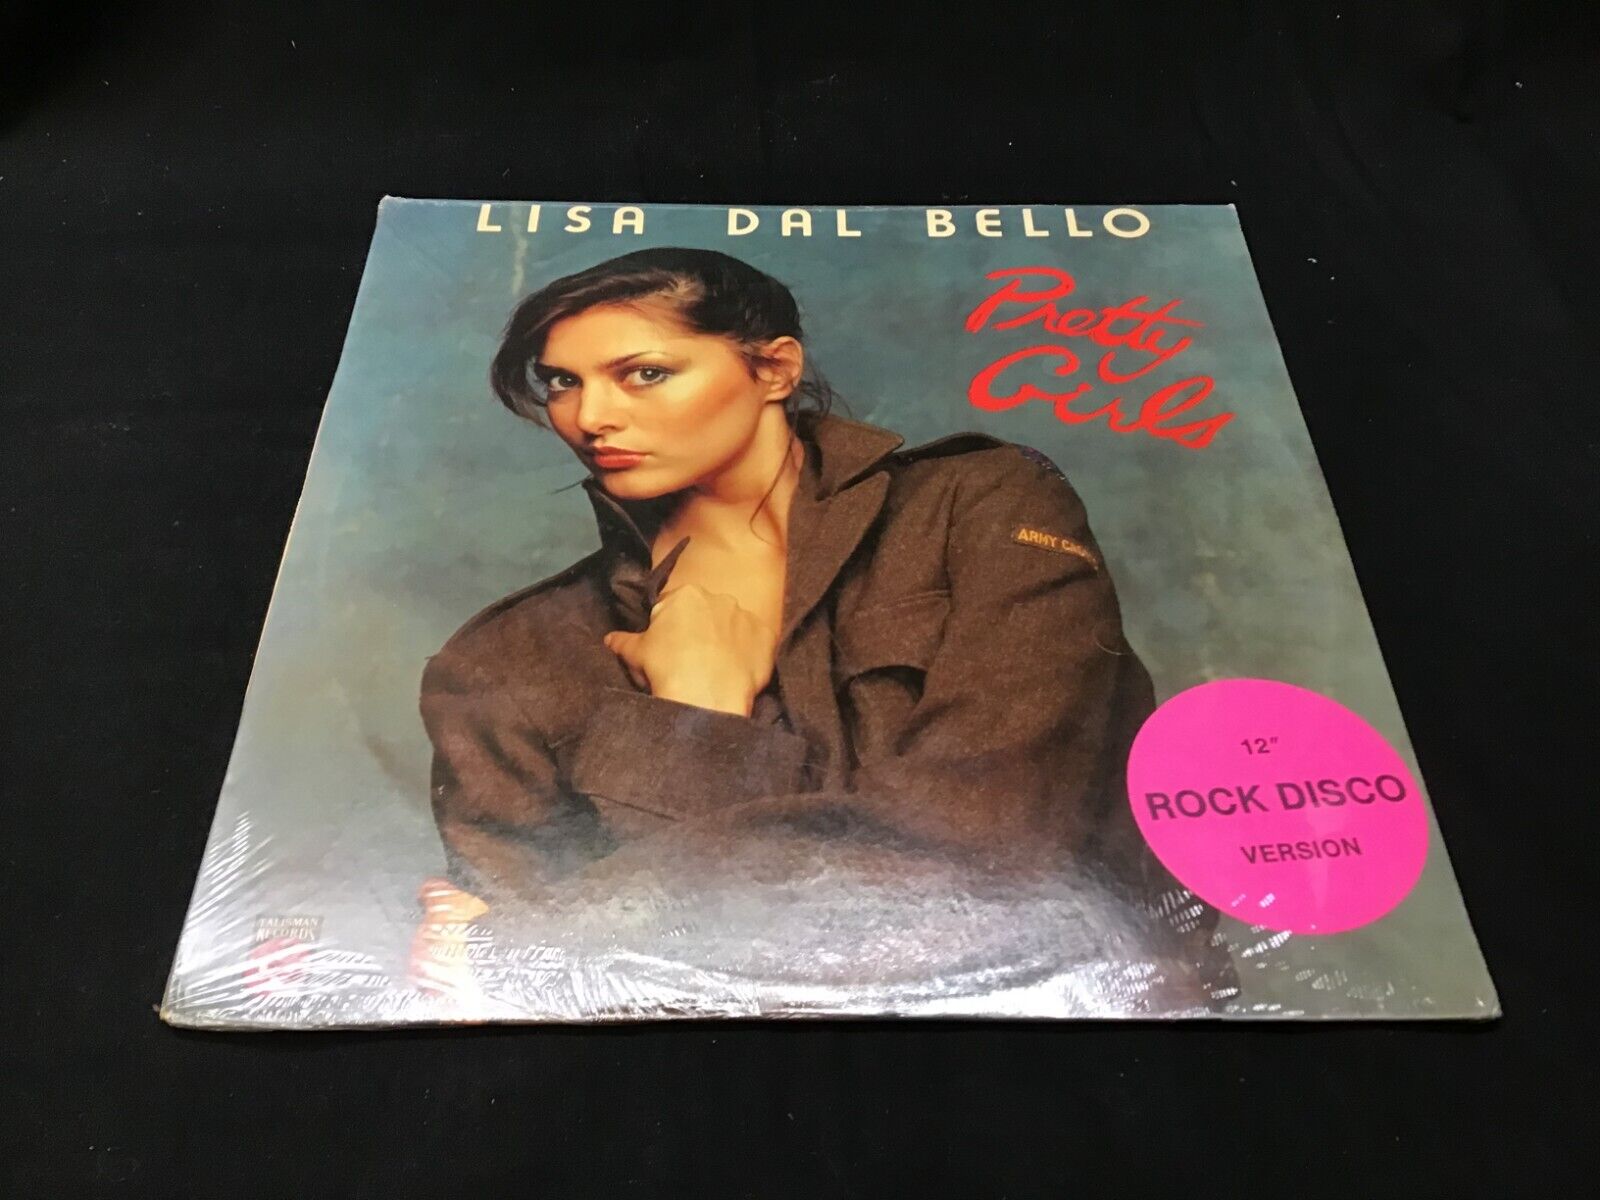 New Vintage vinyl LP LISA DAL BELLO Pretty Girls TALISMAN